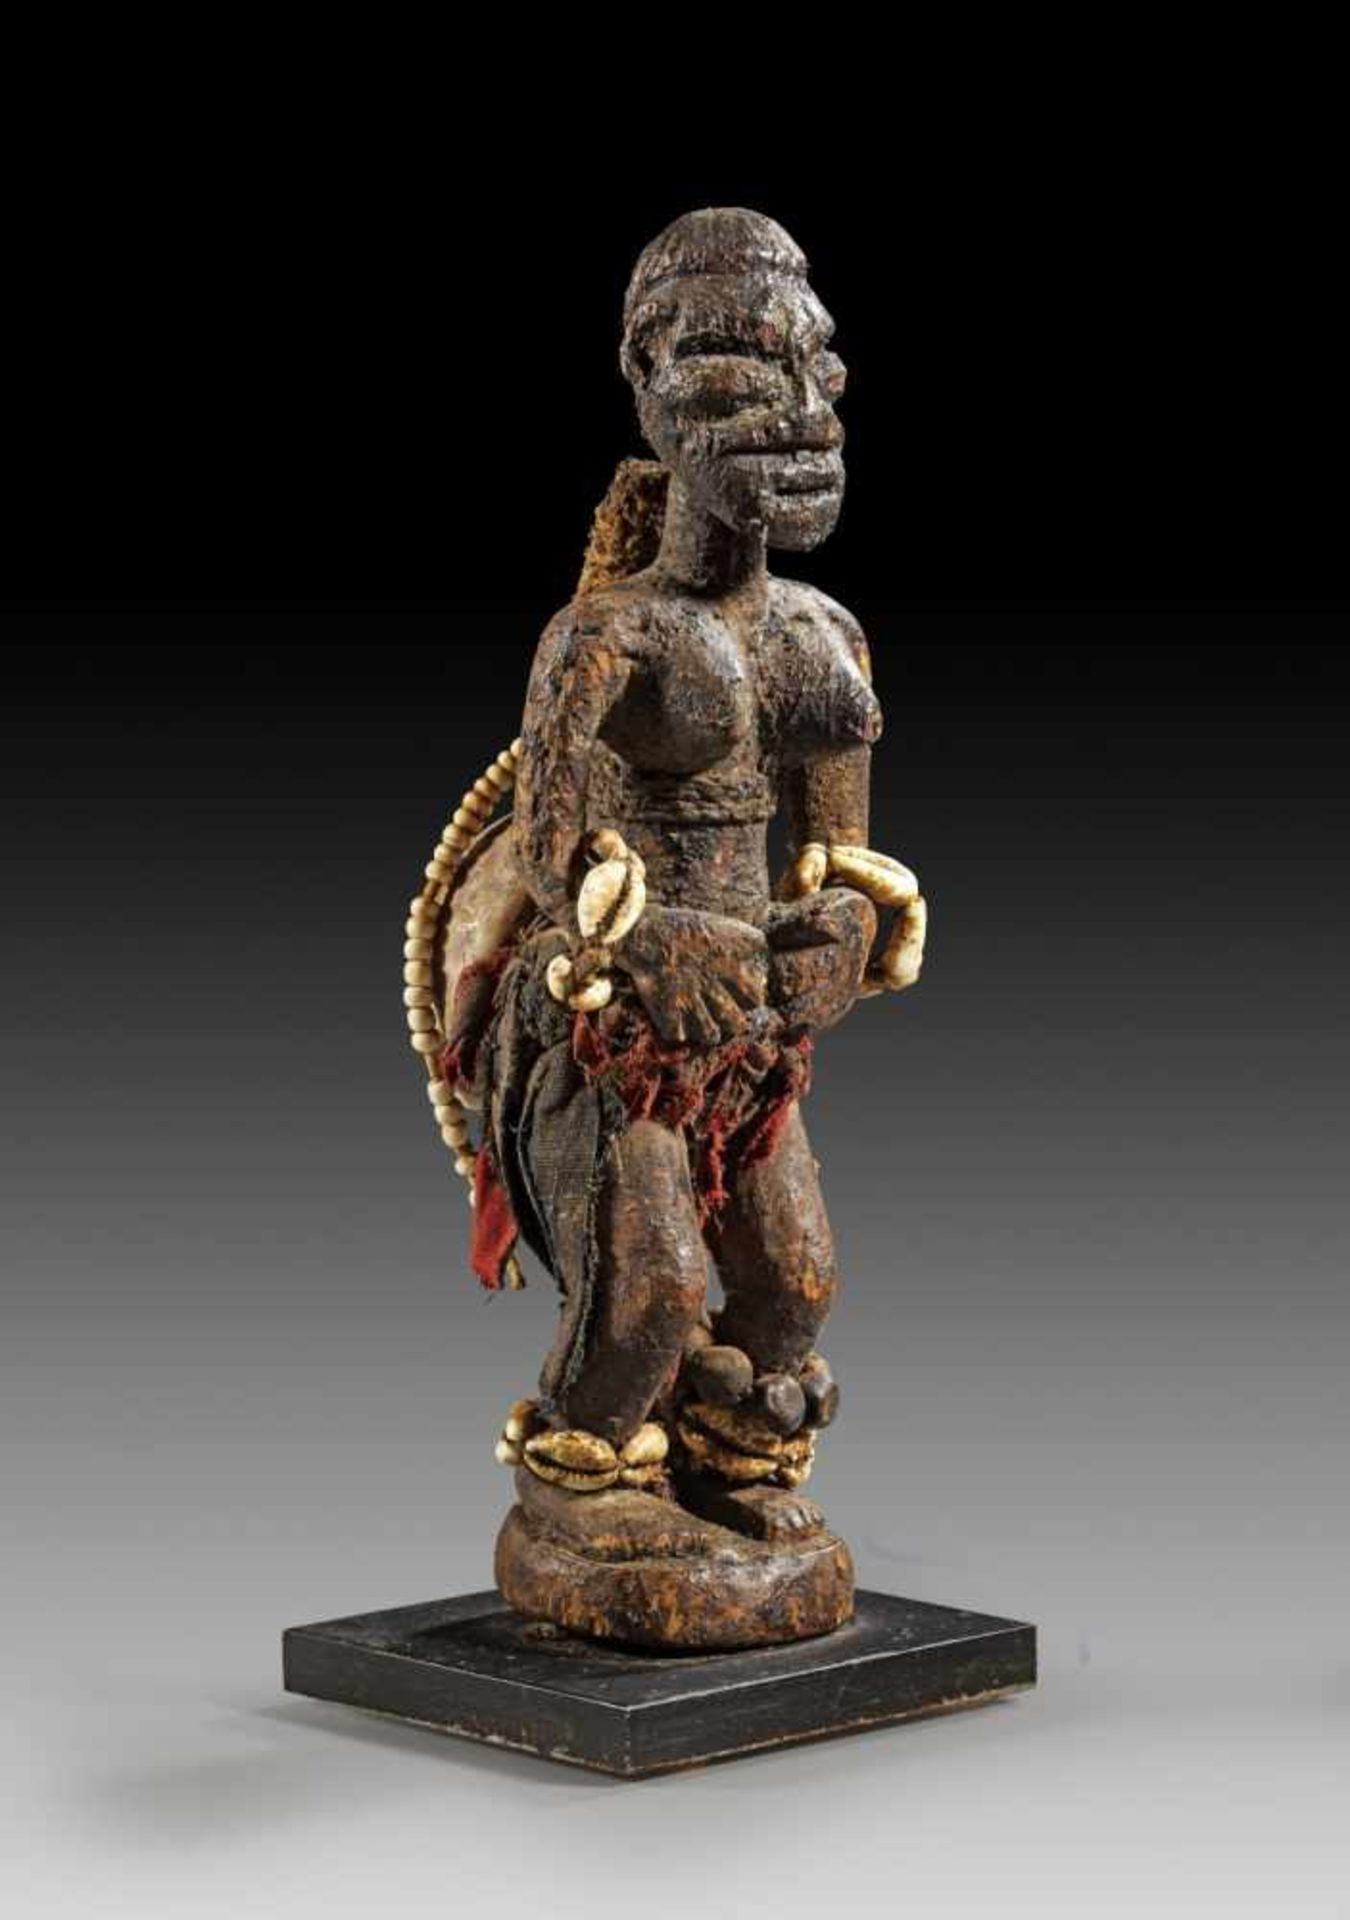 Zauberfigur. Fon, Benin. H 20,5cm. Für den Voodoo-Kult. Intakt.